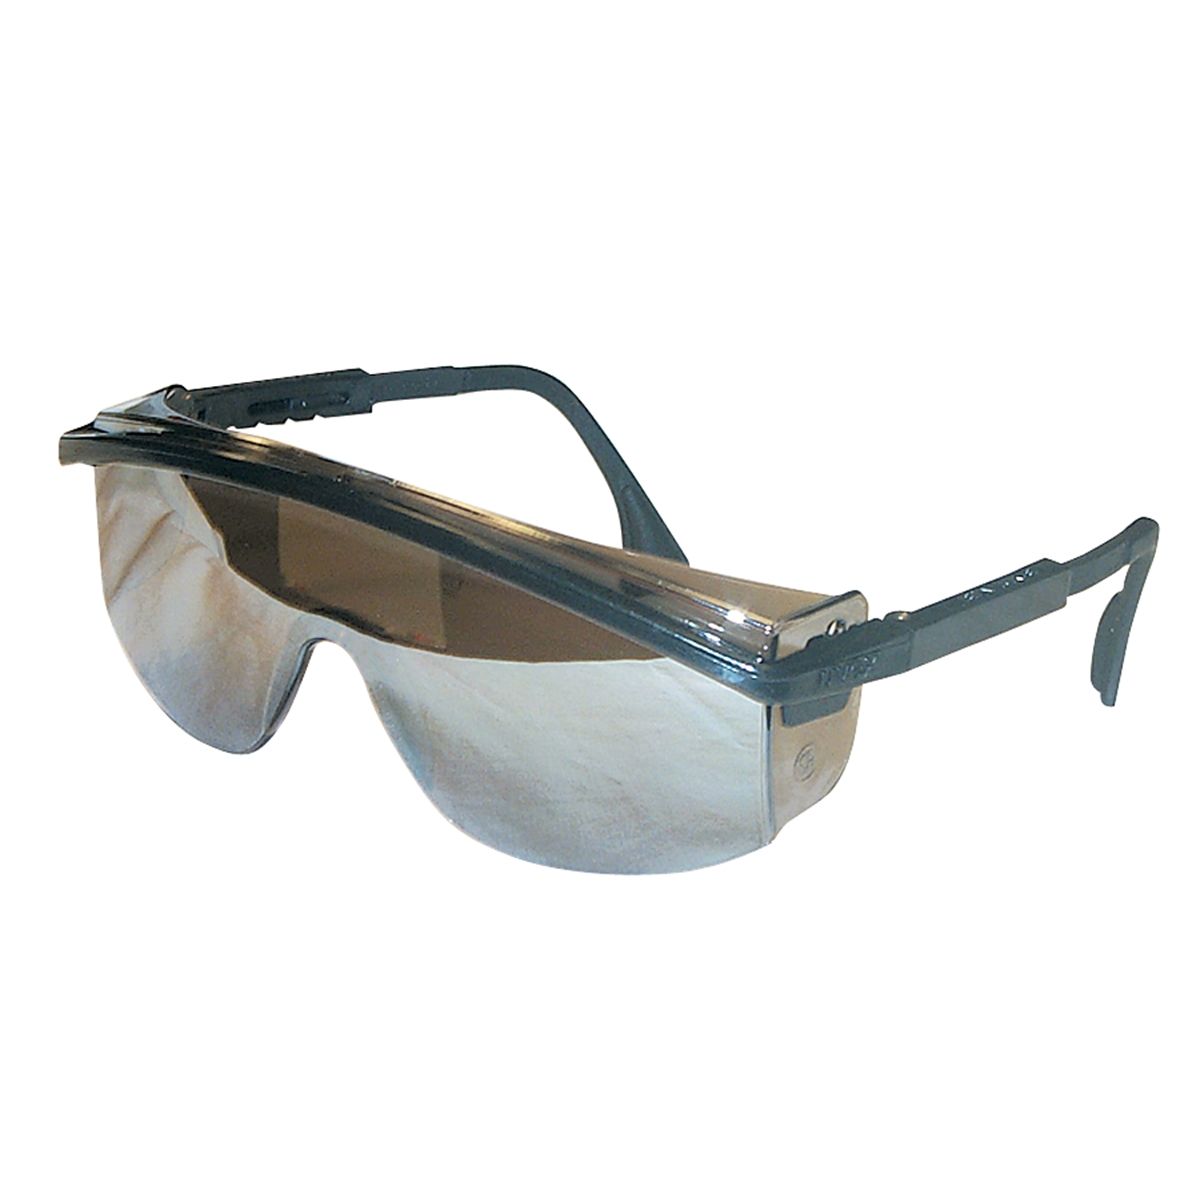 Duoflex Safety Glasses - Astrospec 3000 - Black/Mirror Lens